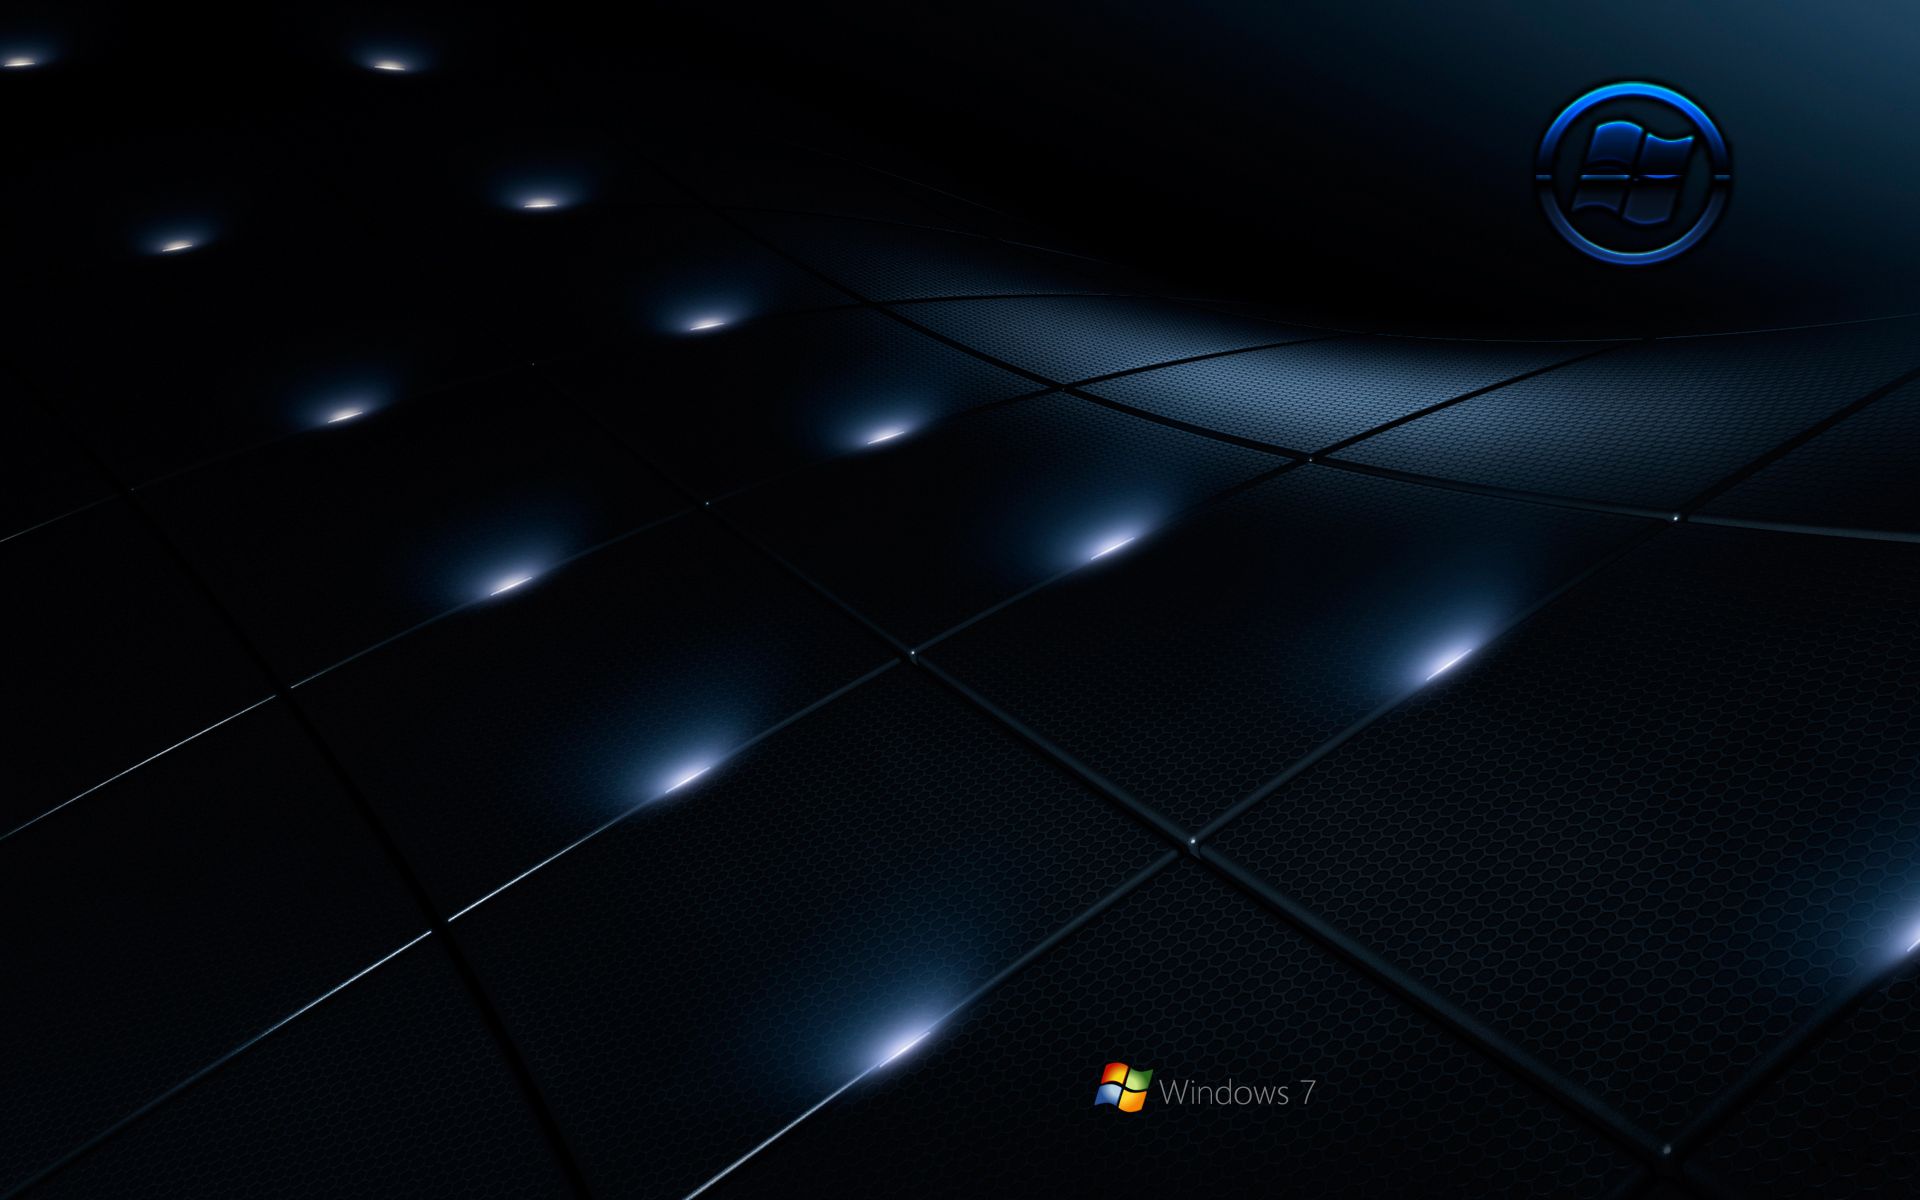 Windows 7 Black wallpaper by kubines on DeviantArt